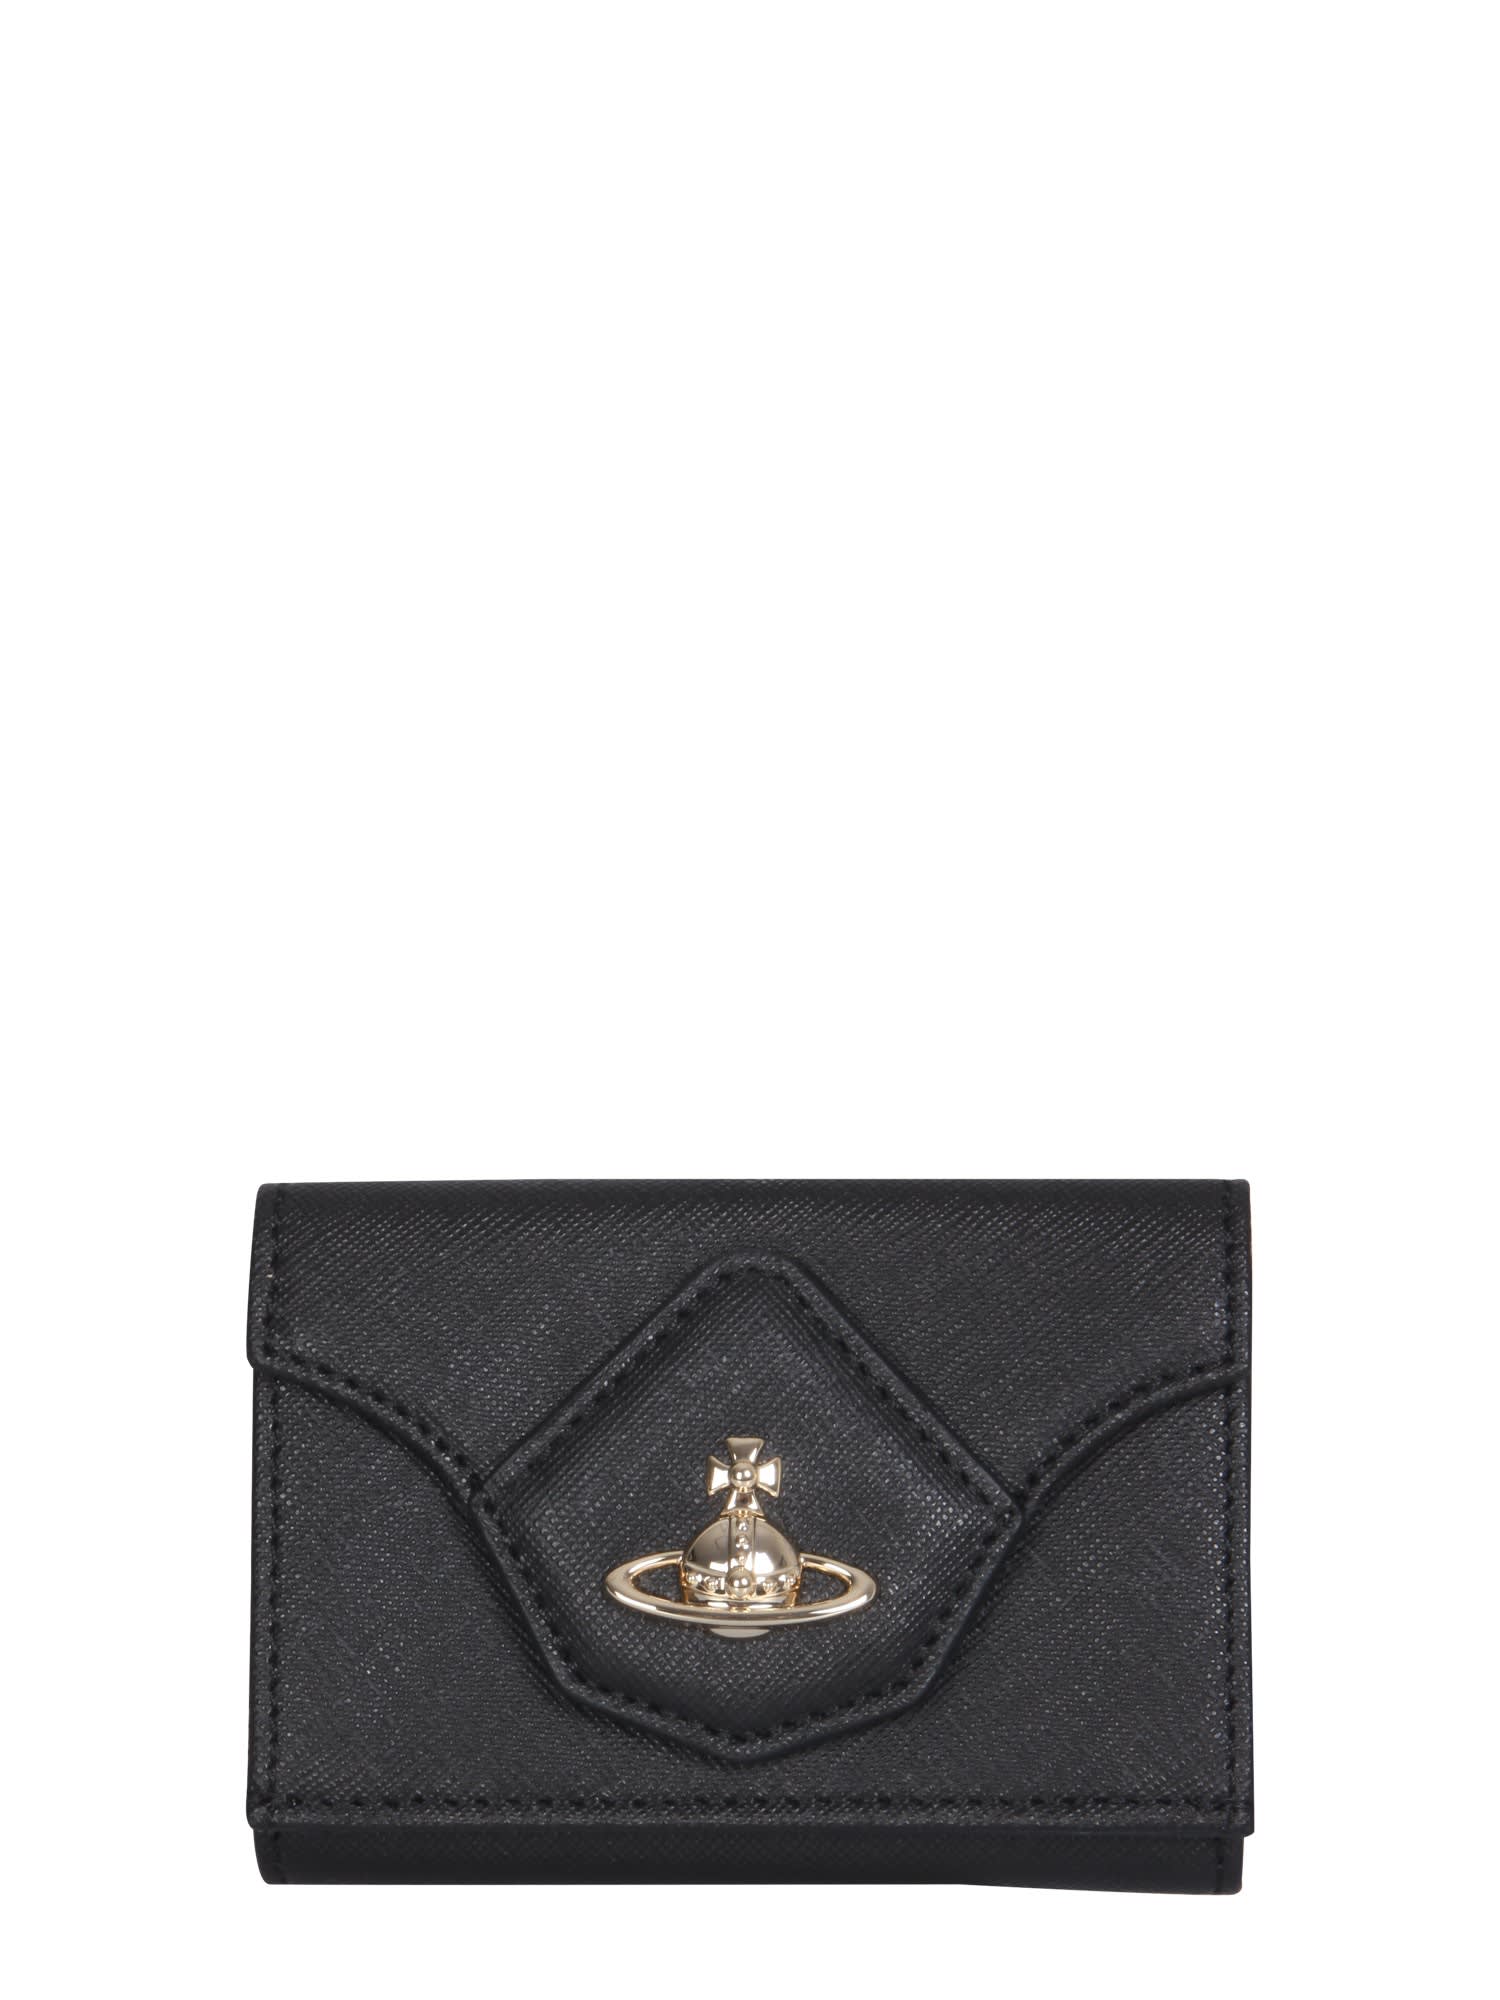 Vivienne Westwood Victoria Leather Wallet